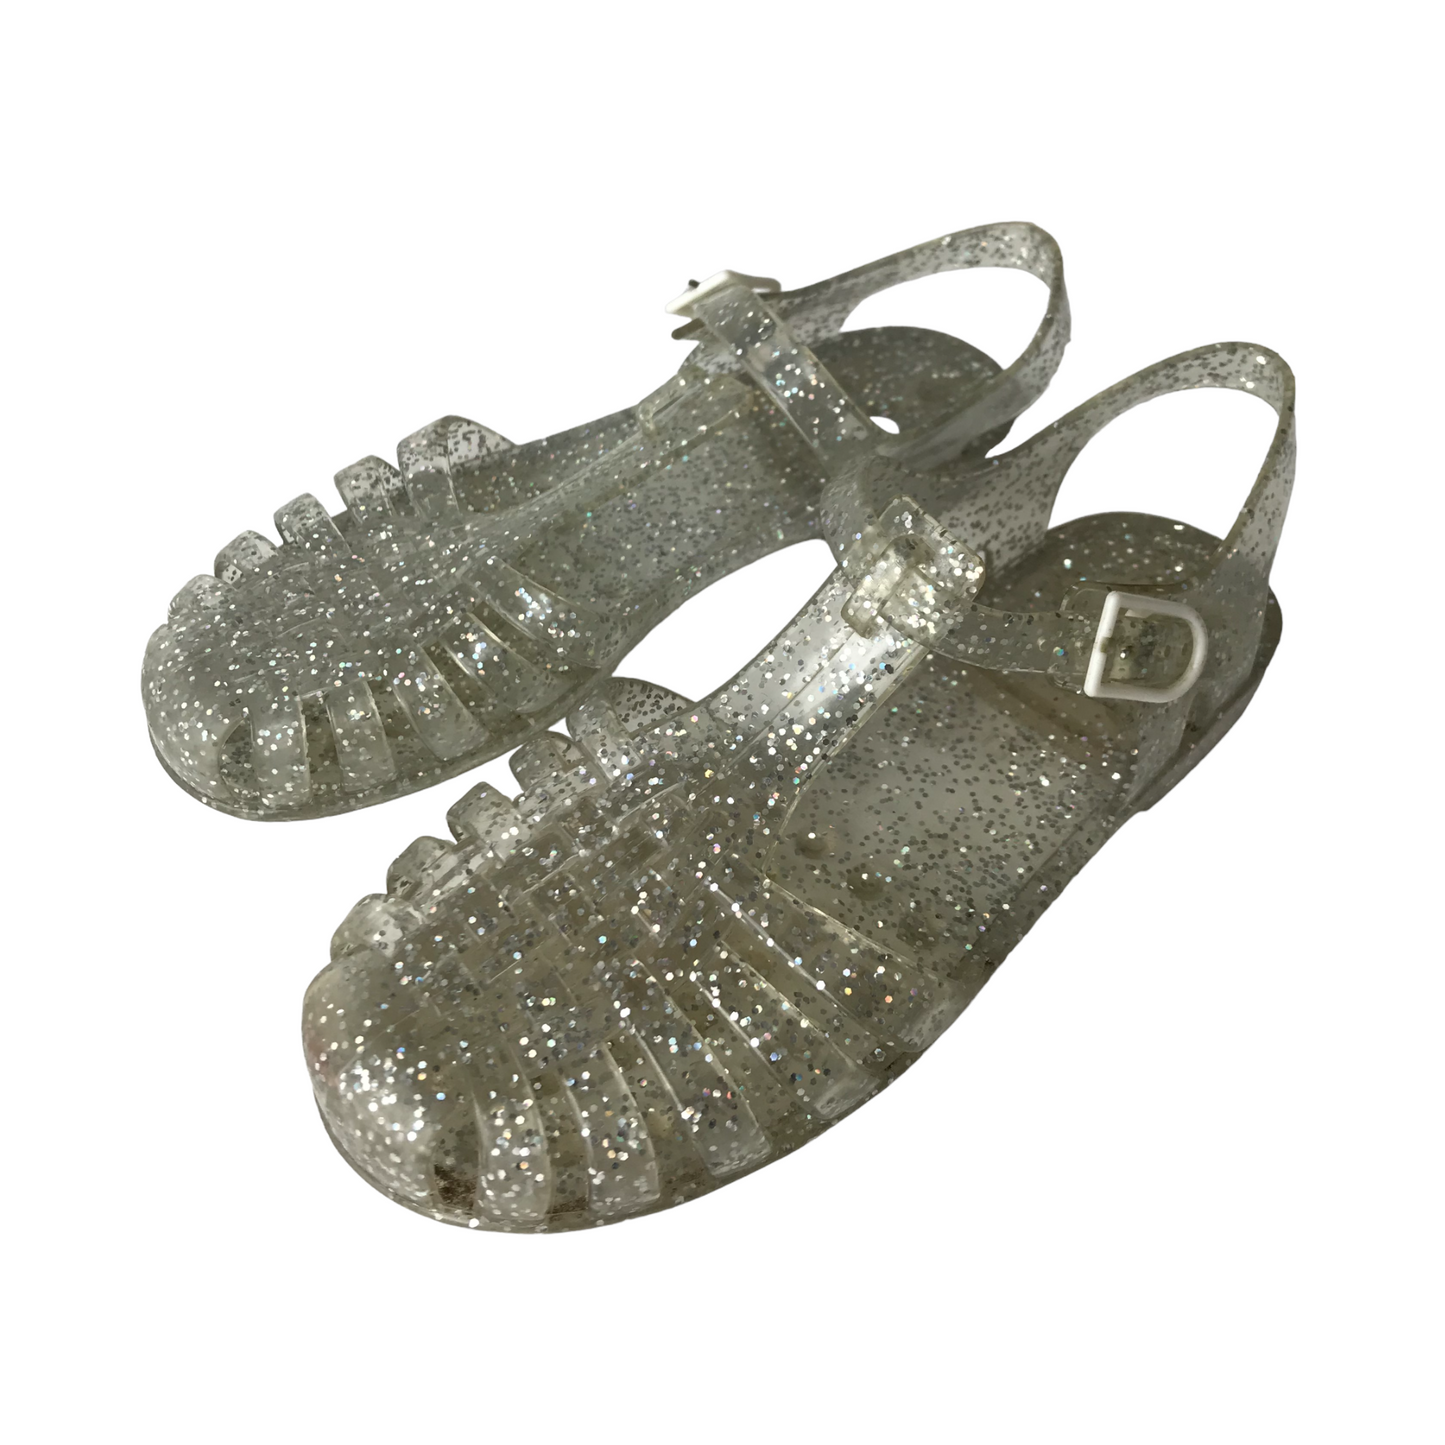 Glittery Silver Jelly Sandals Shoe size 13 (jr)